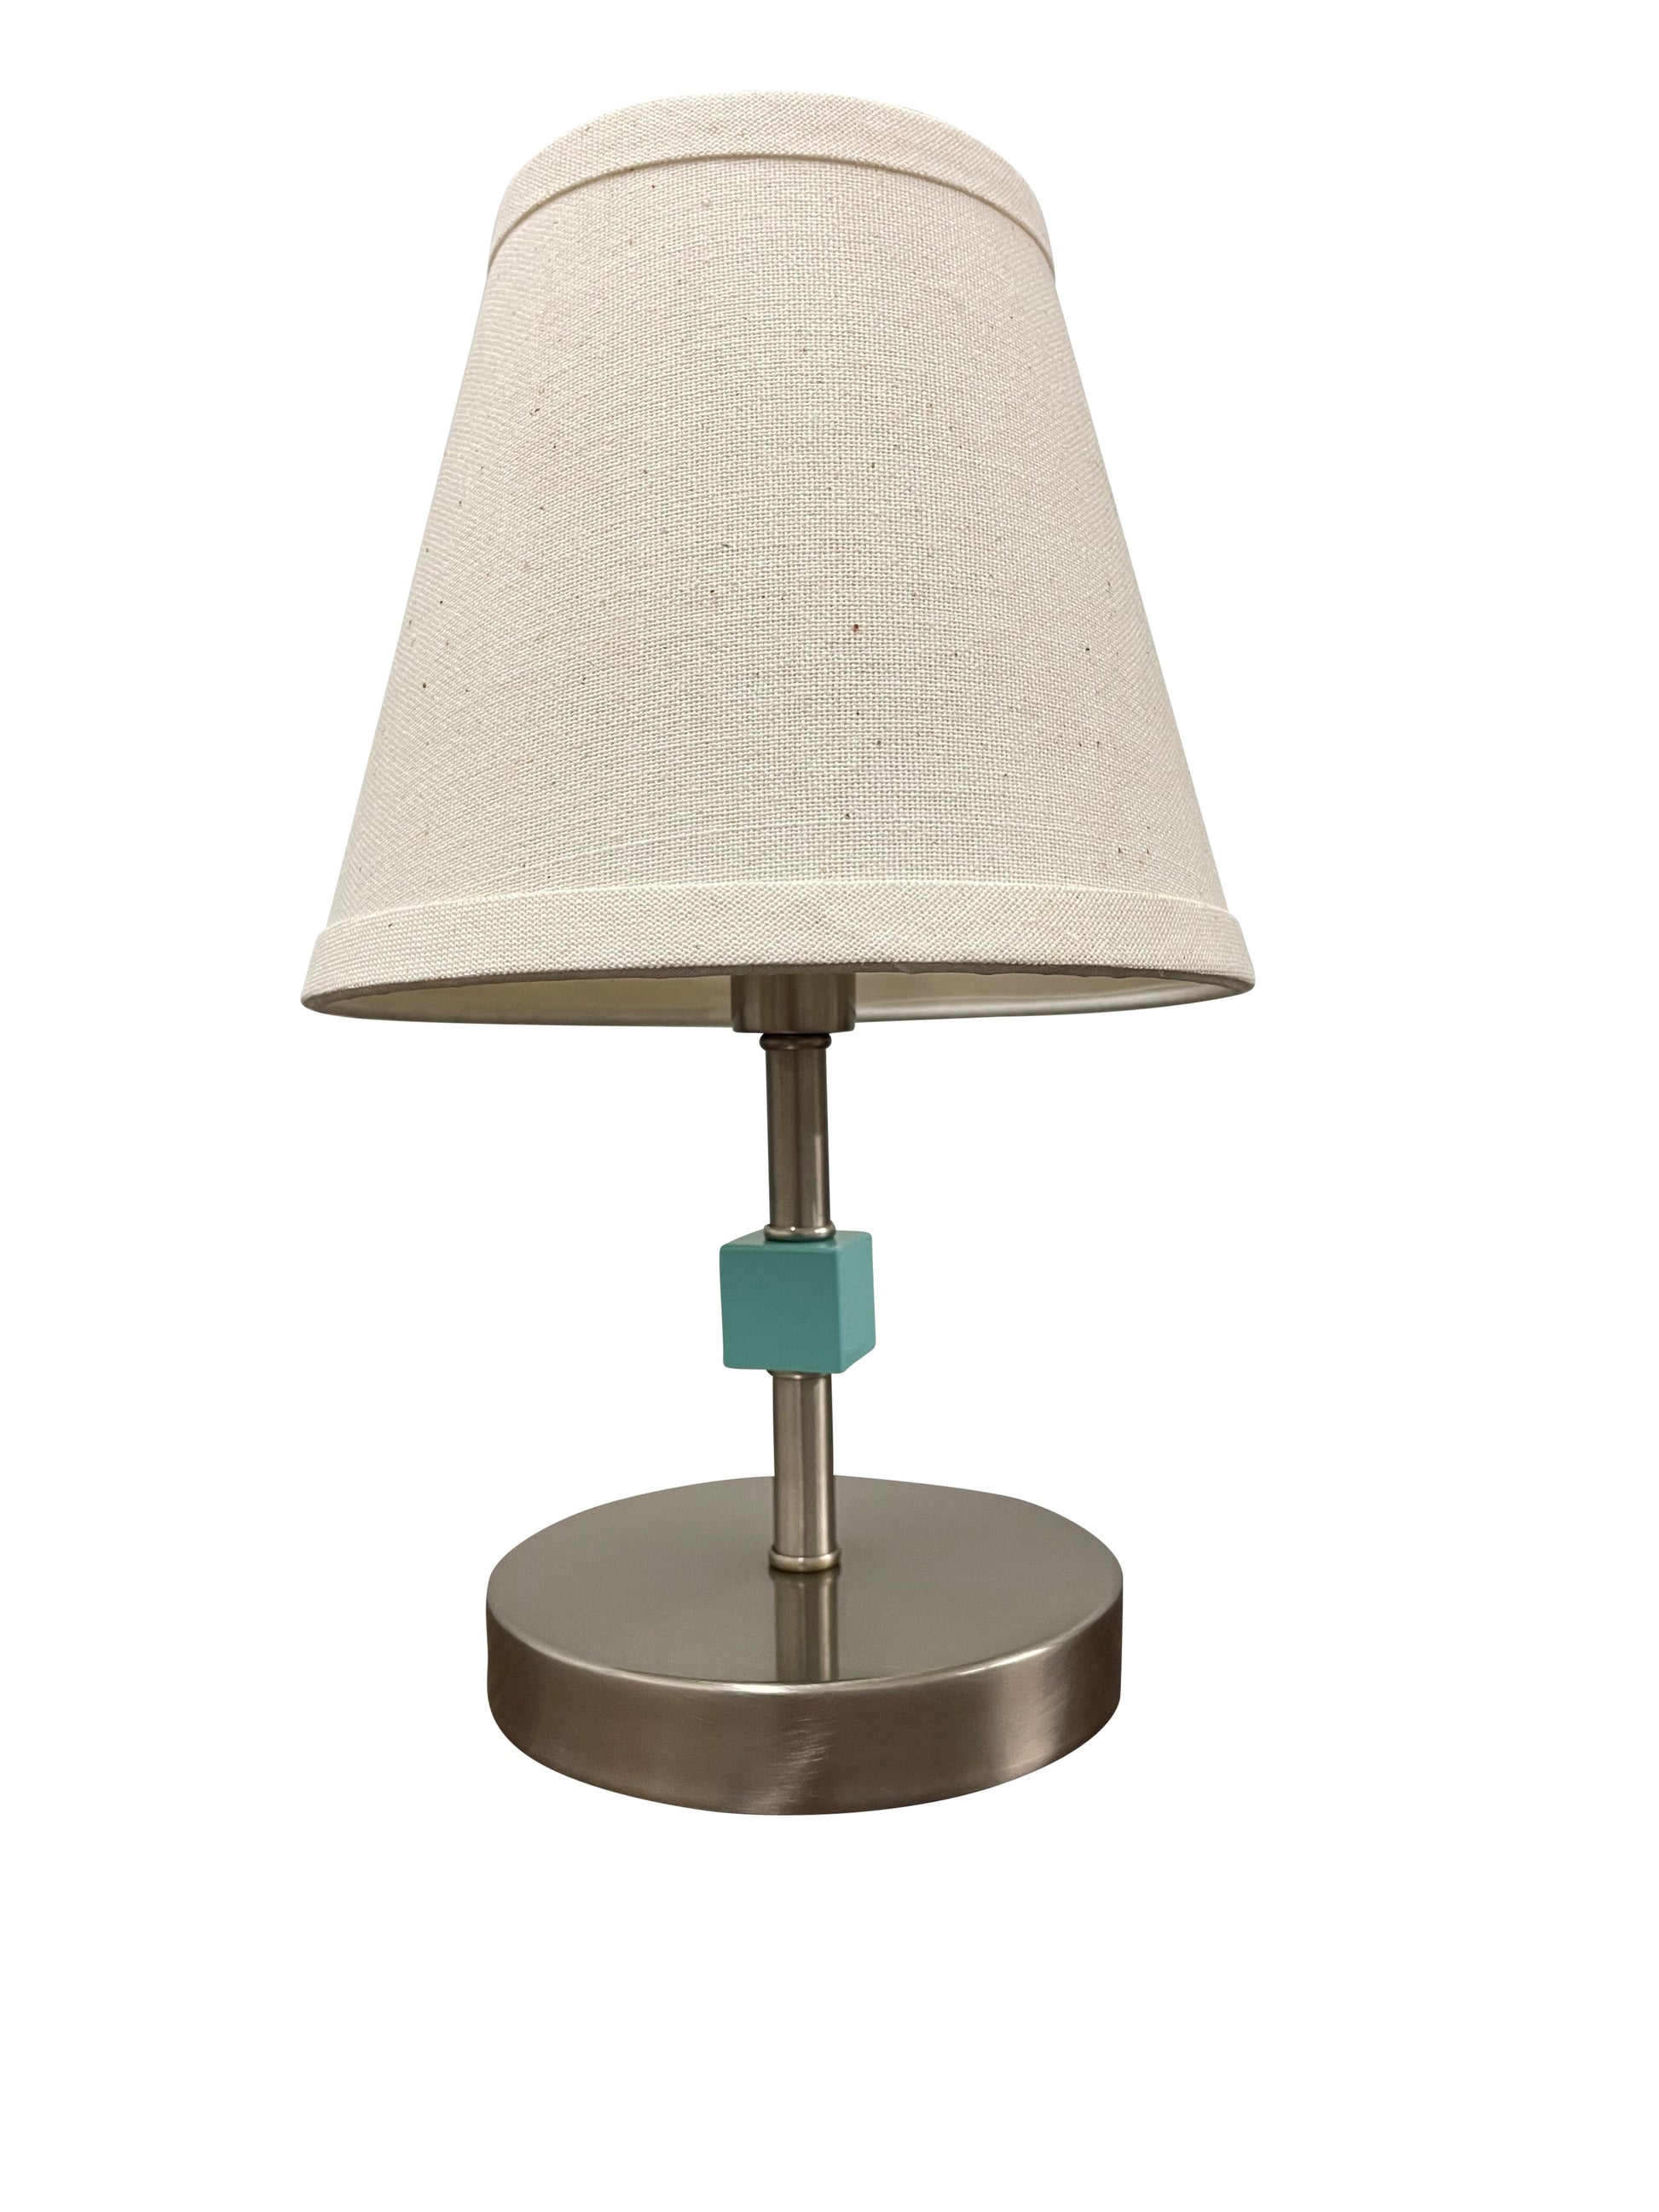 House of Troy Bryson Mini satin nickel/mint accent lamp B203-SN/MT